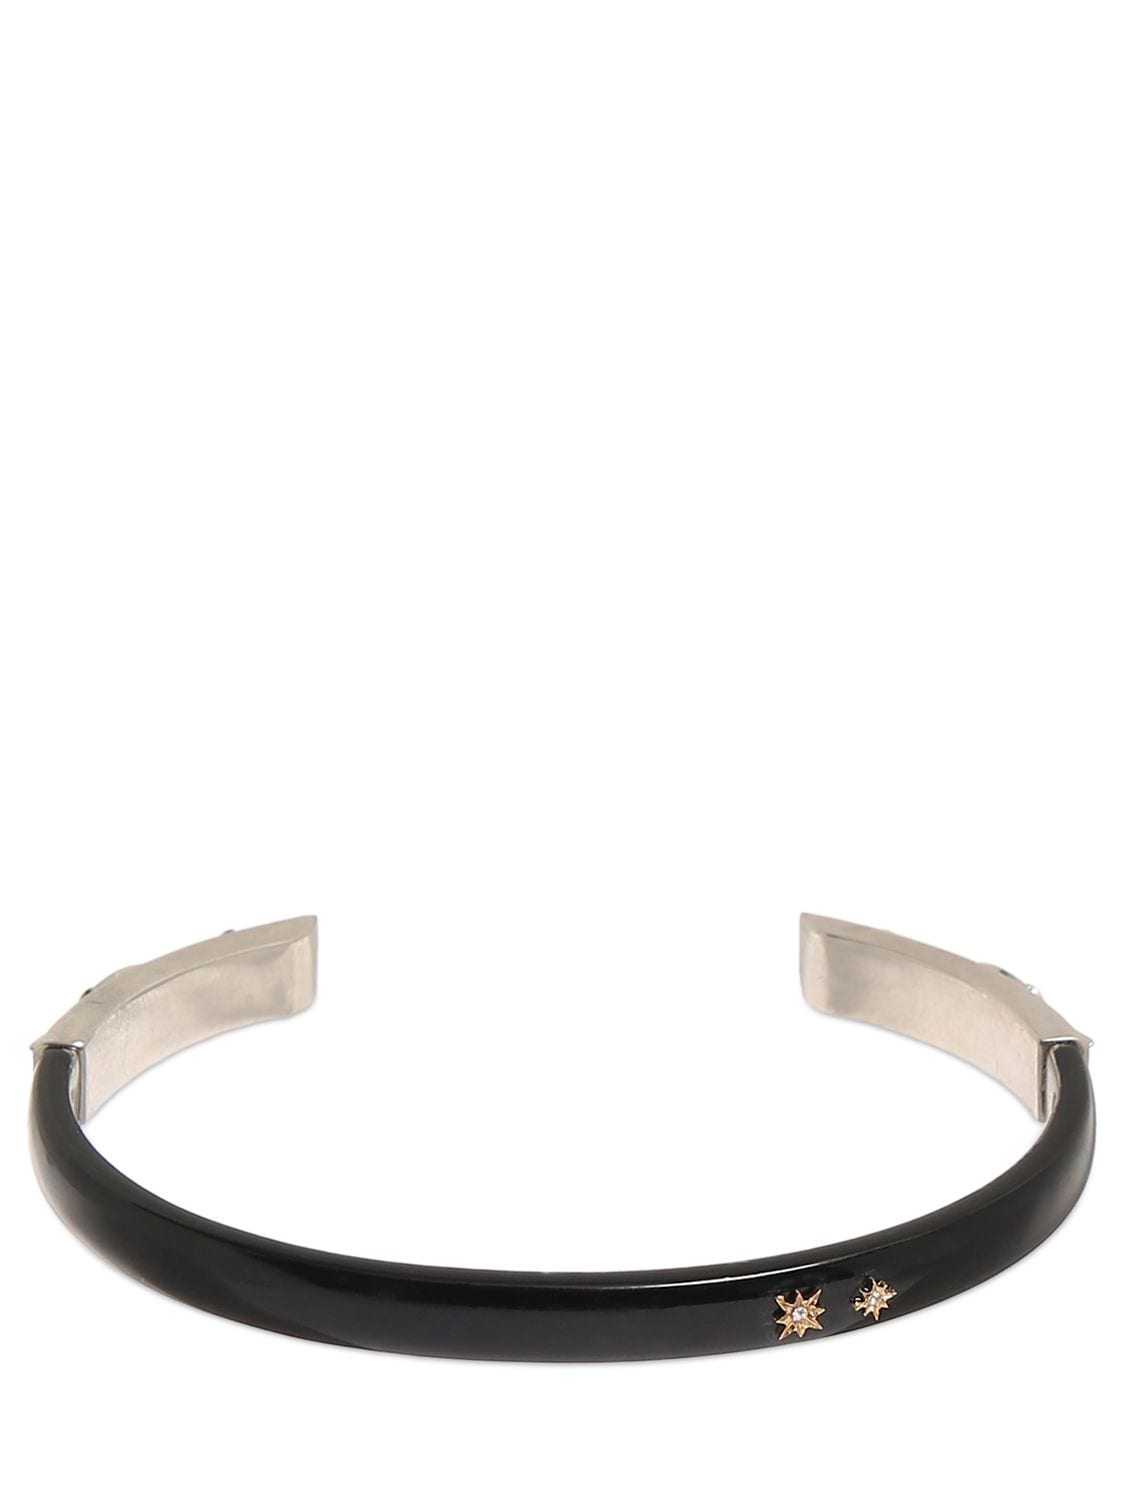 Image of Enamel Crystal Star Cuff Bracelet